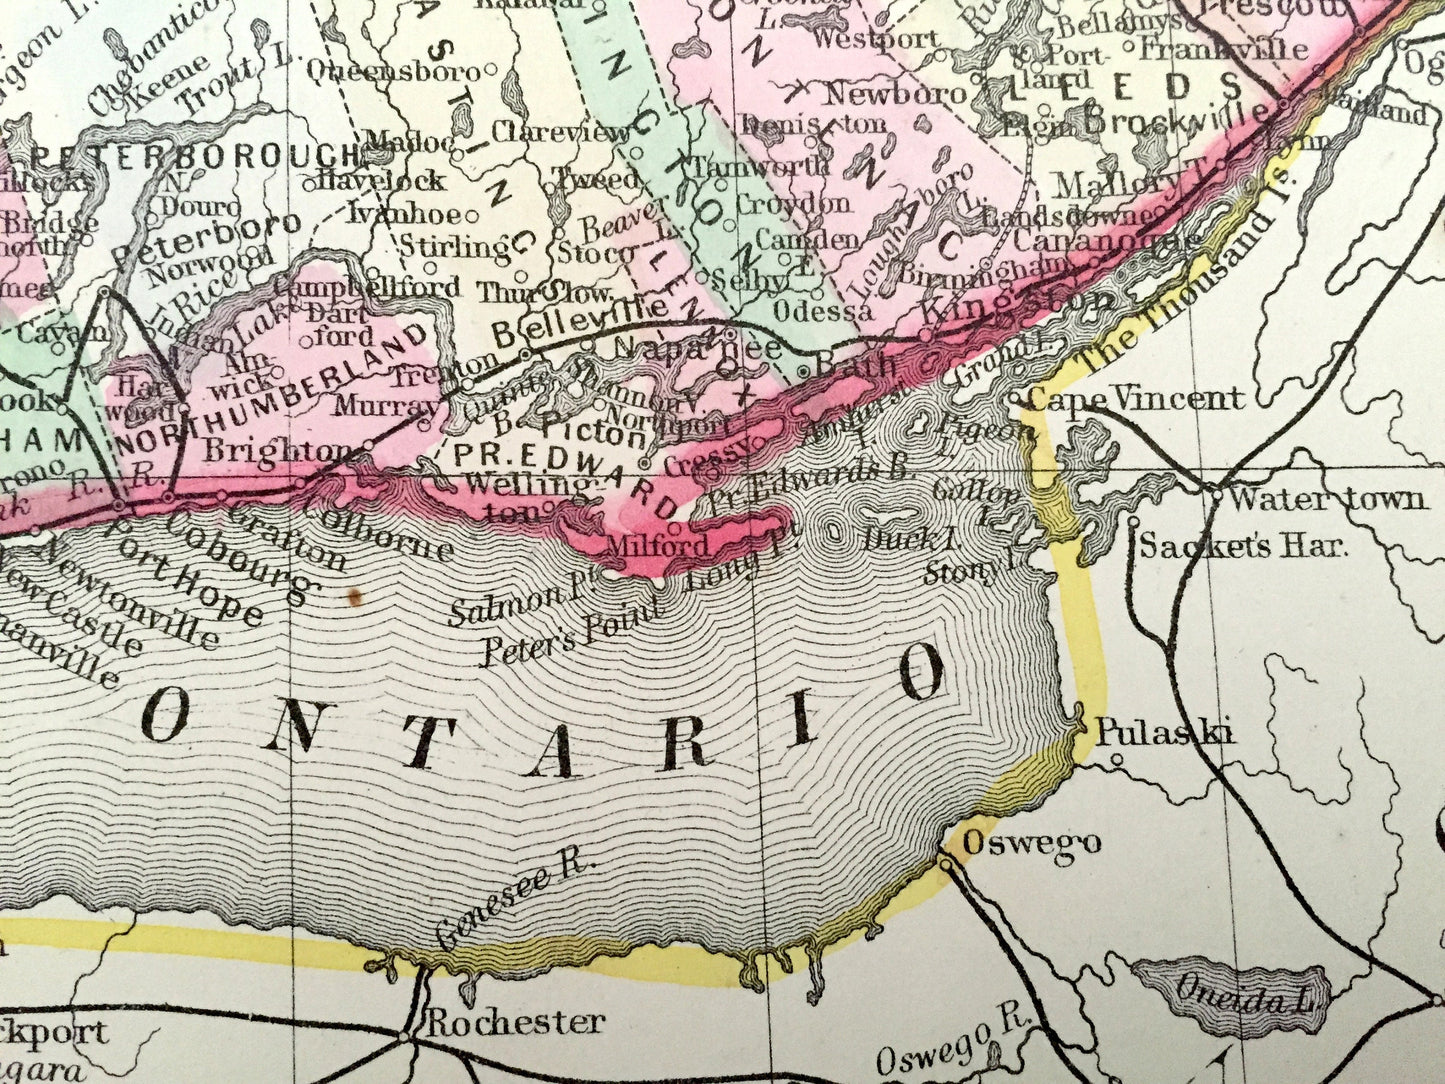 Antique 1871 Ontario, Canada Map by S.A. Mitchell – Toronto, Ottawa, Windsor, London, Niagara Falls, Michigan, New York, Thousand Islands